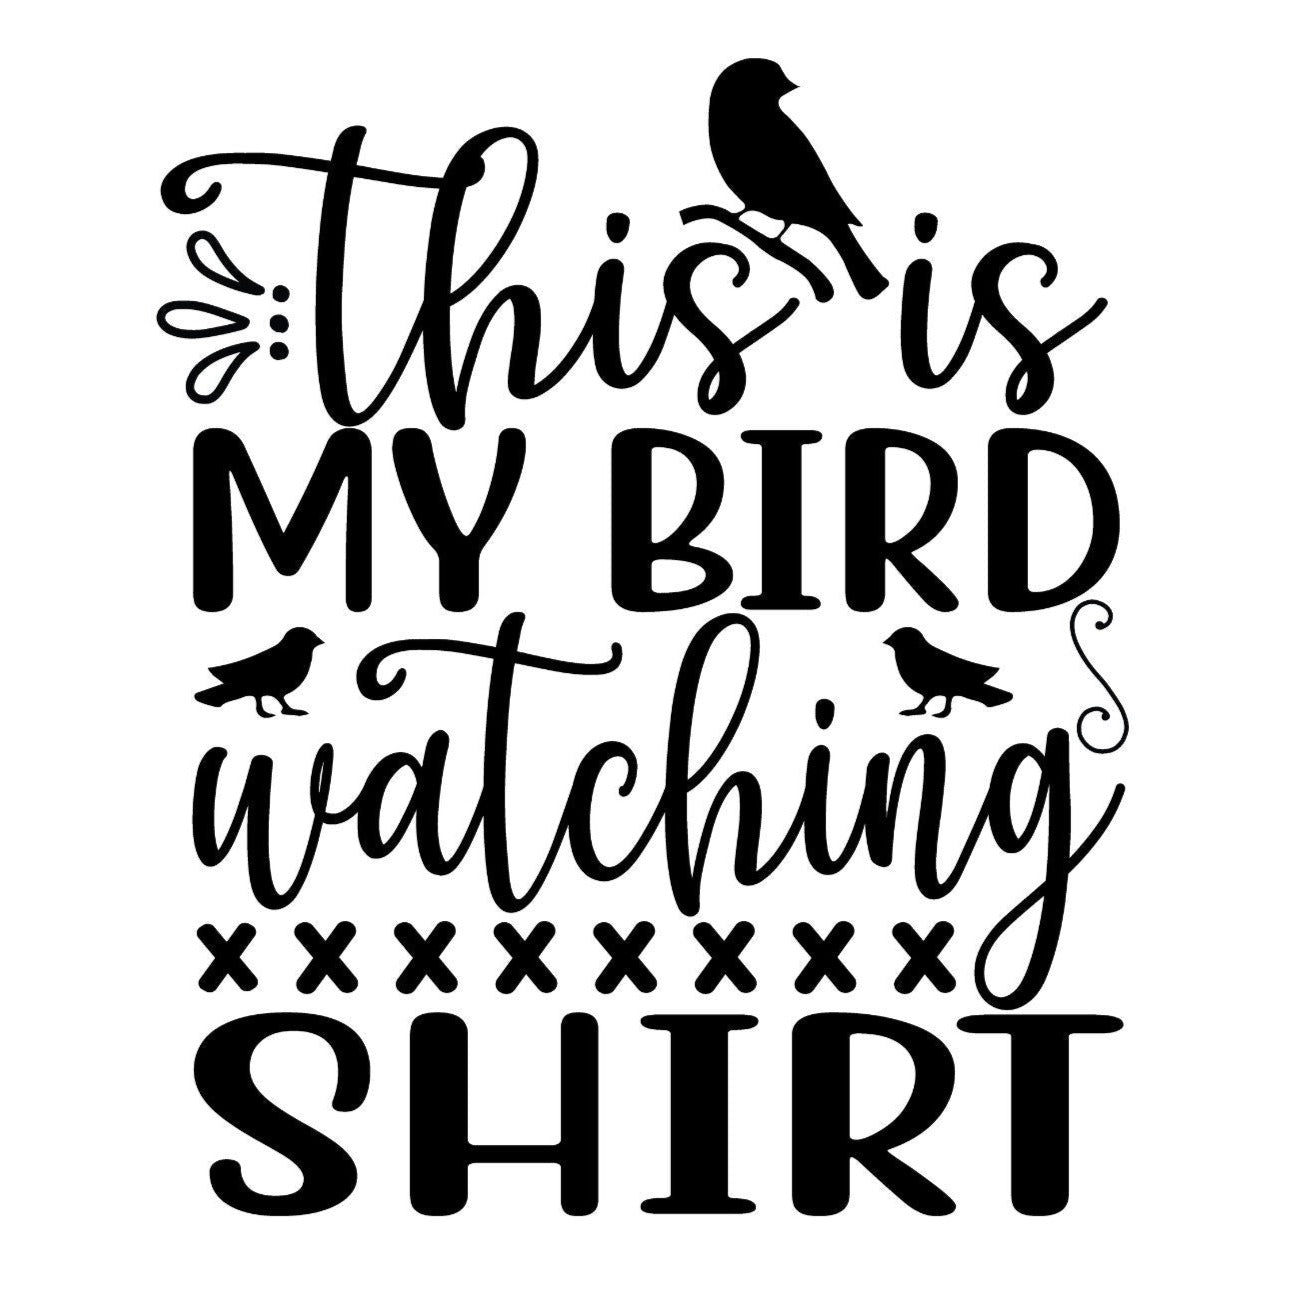 My Bird Watching Shirt